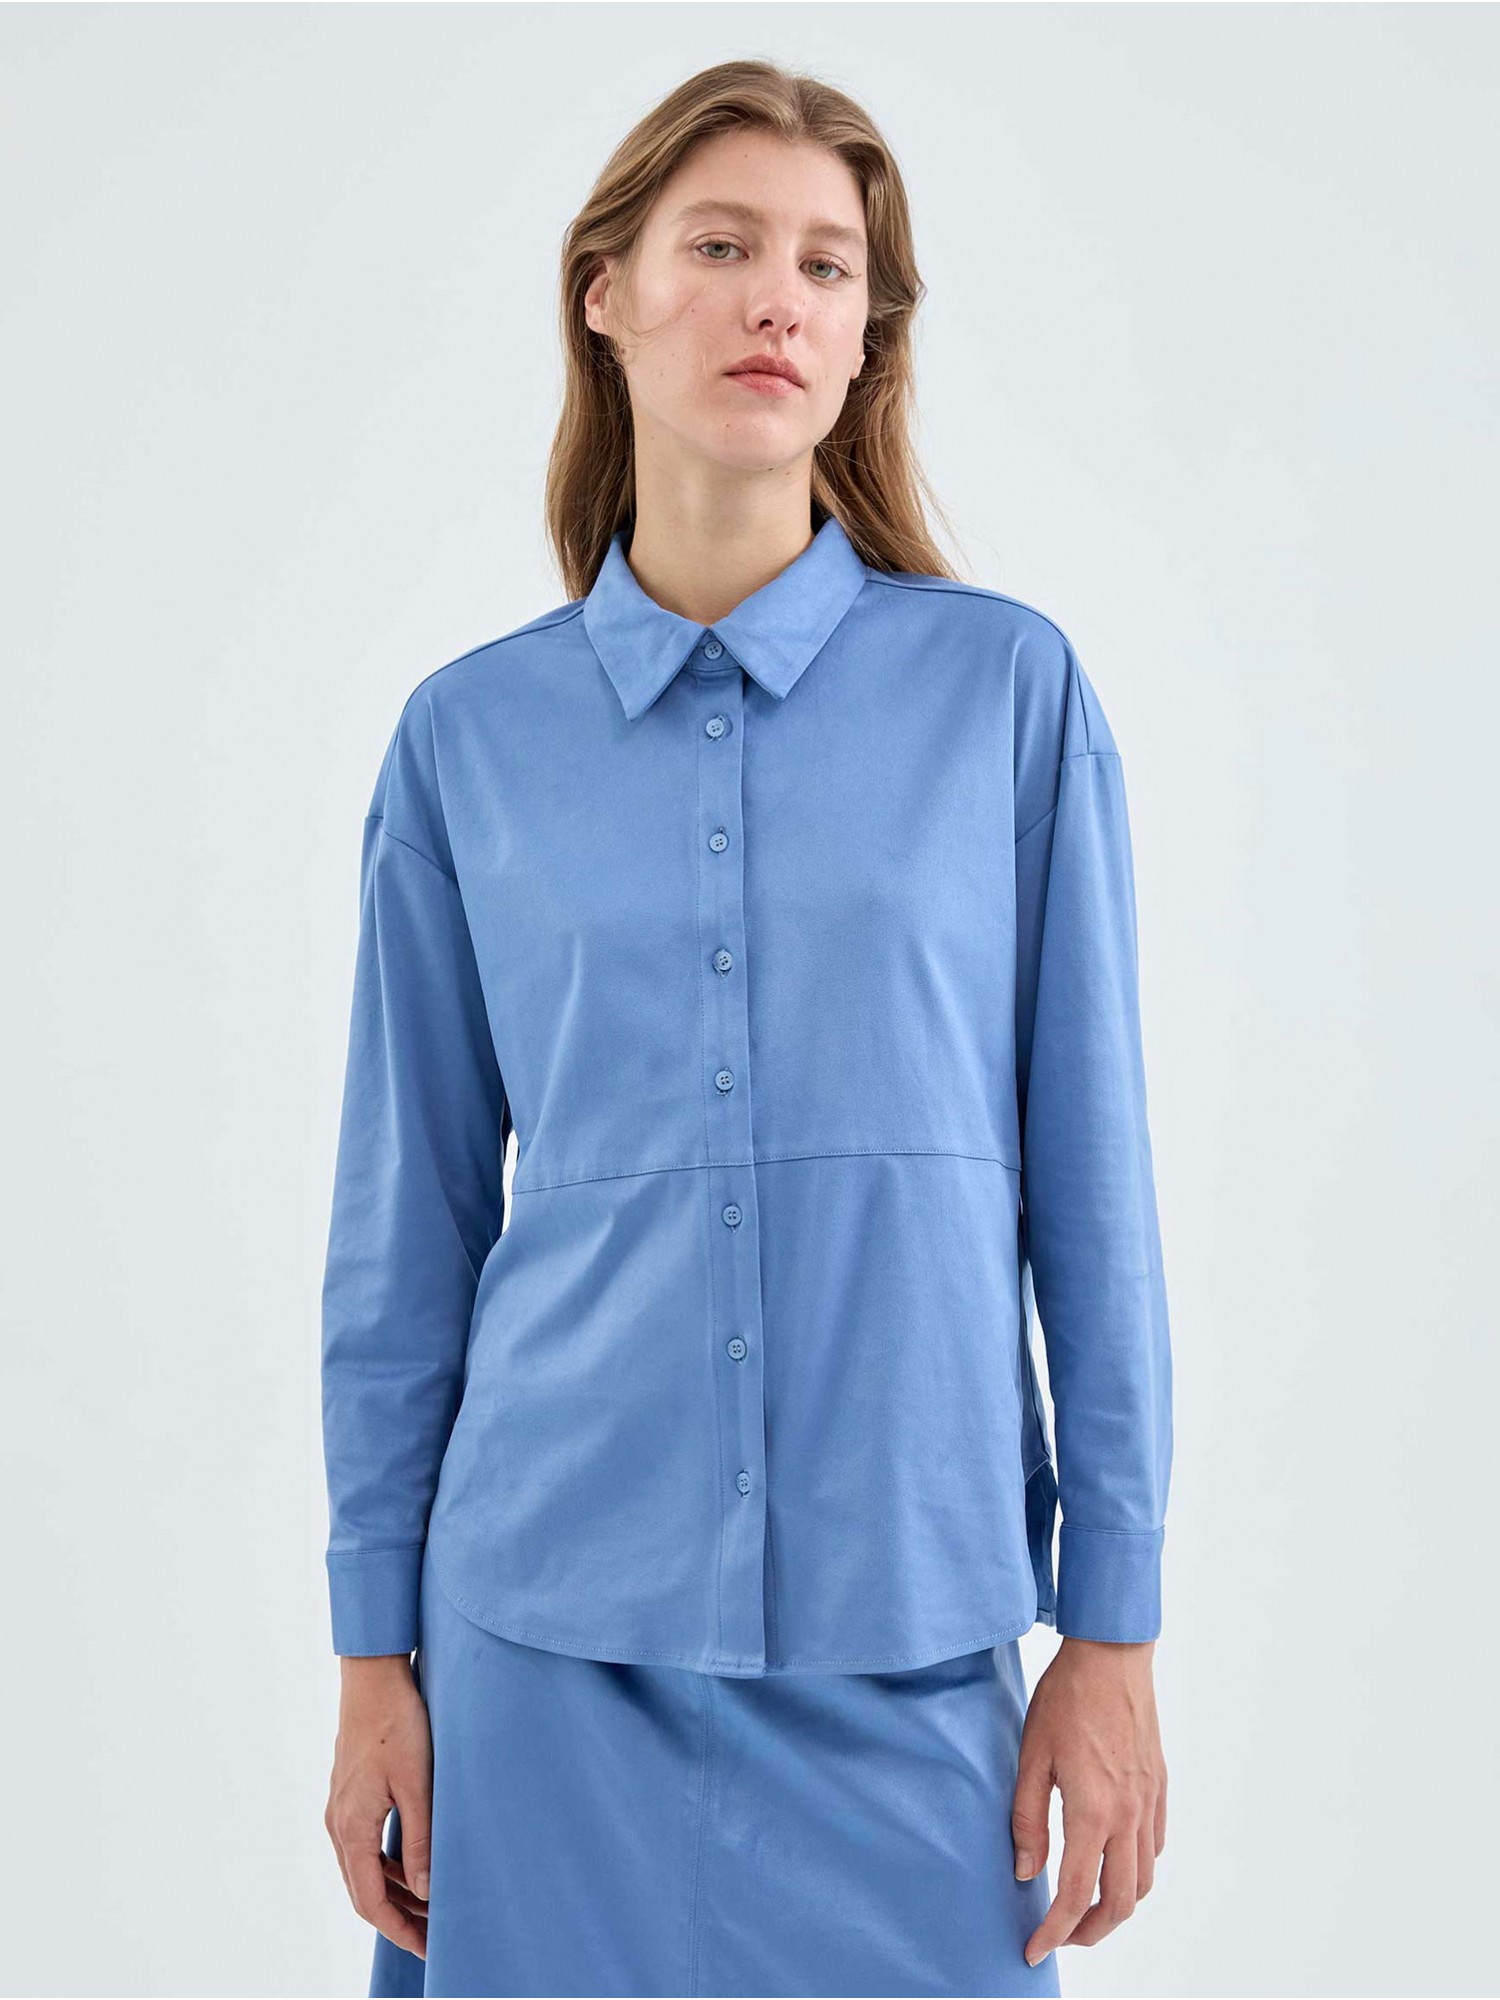 Camisa manga larga CLoud. Colección AW23 Compañía Fantástica en candelascloset. Tejido de ante color azul y detalle costuras.